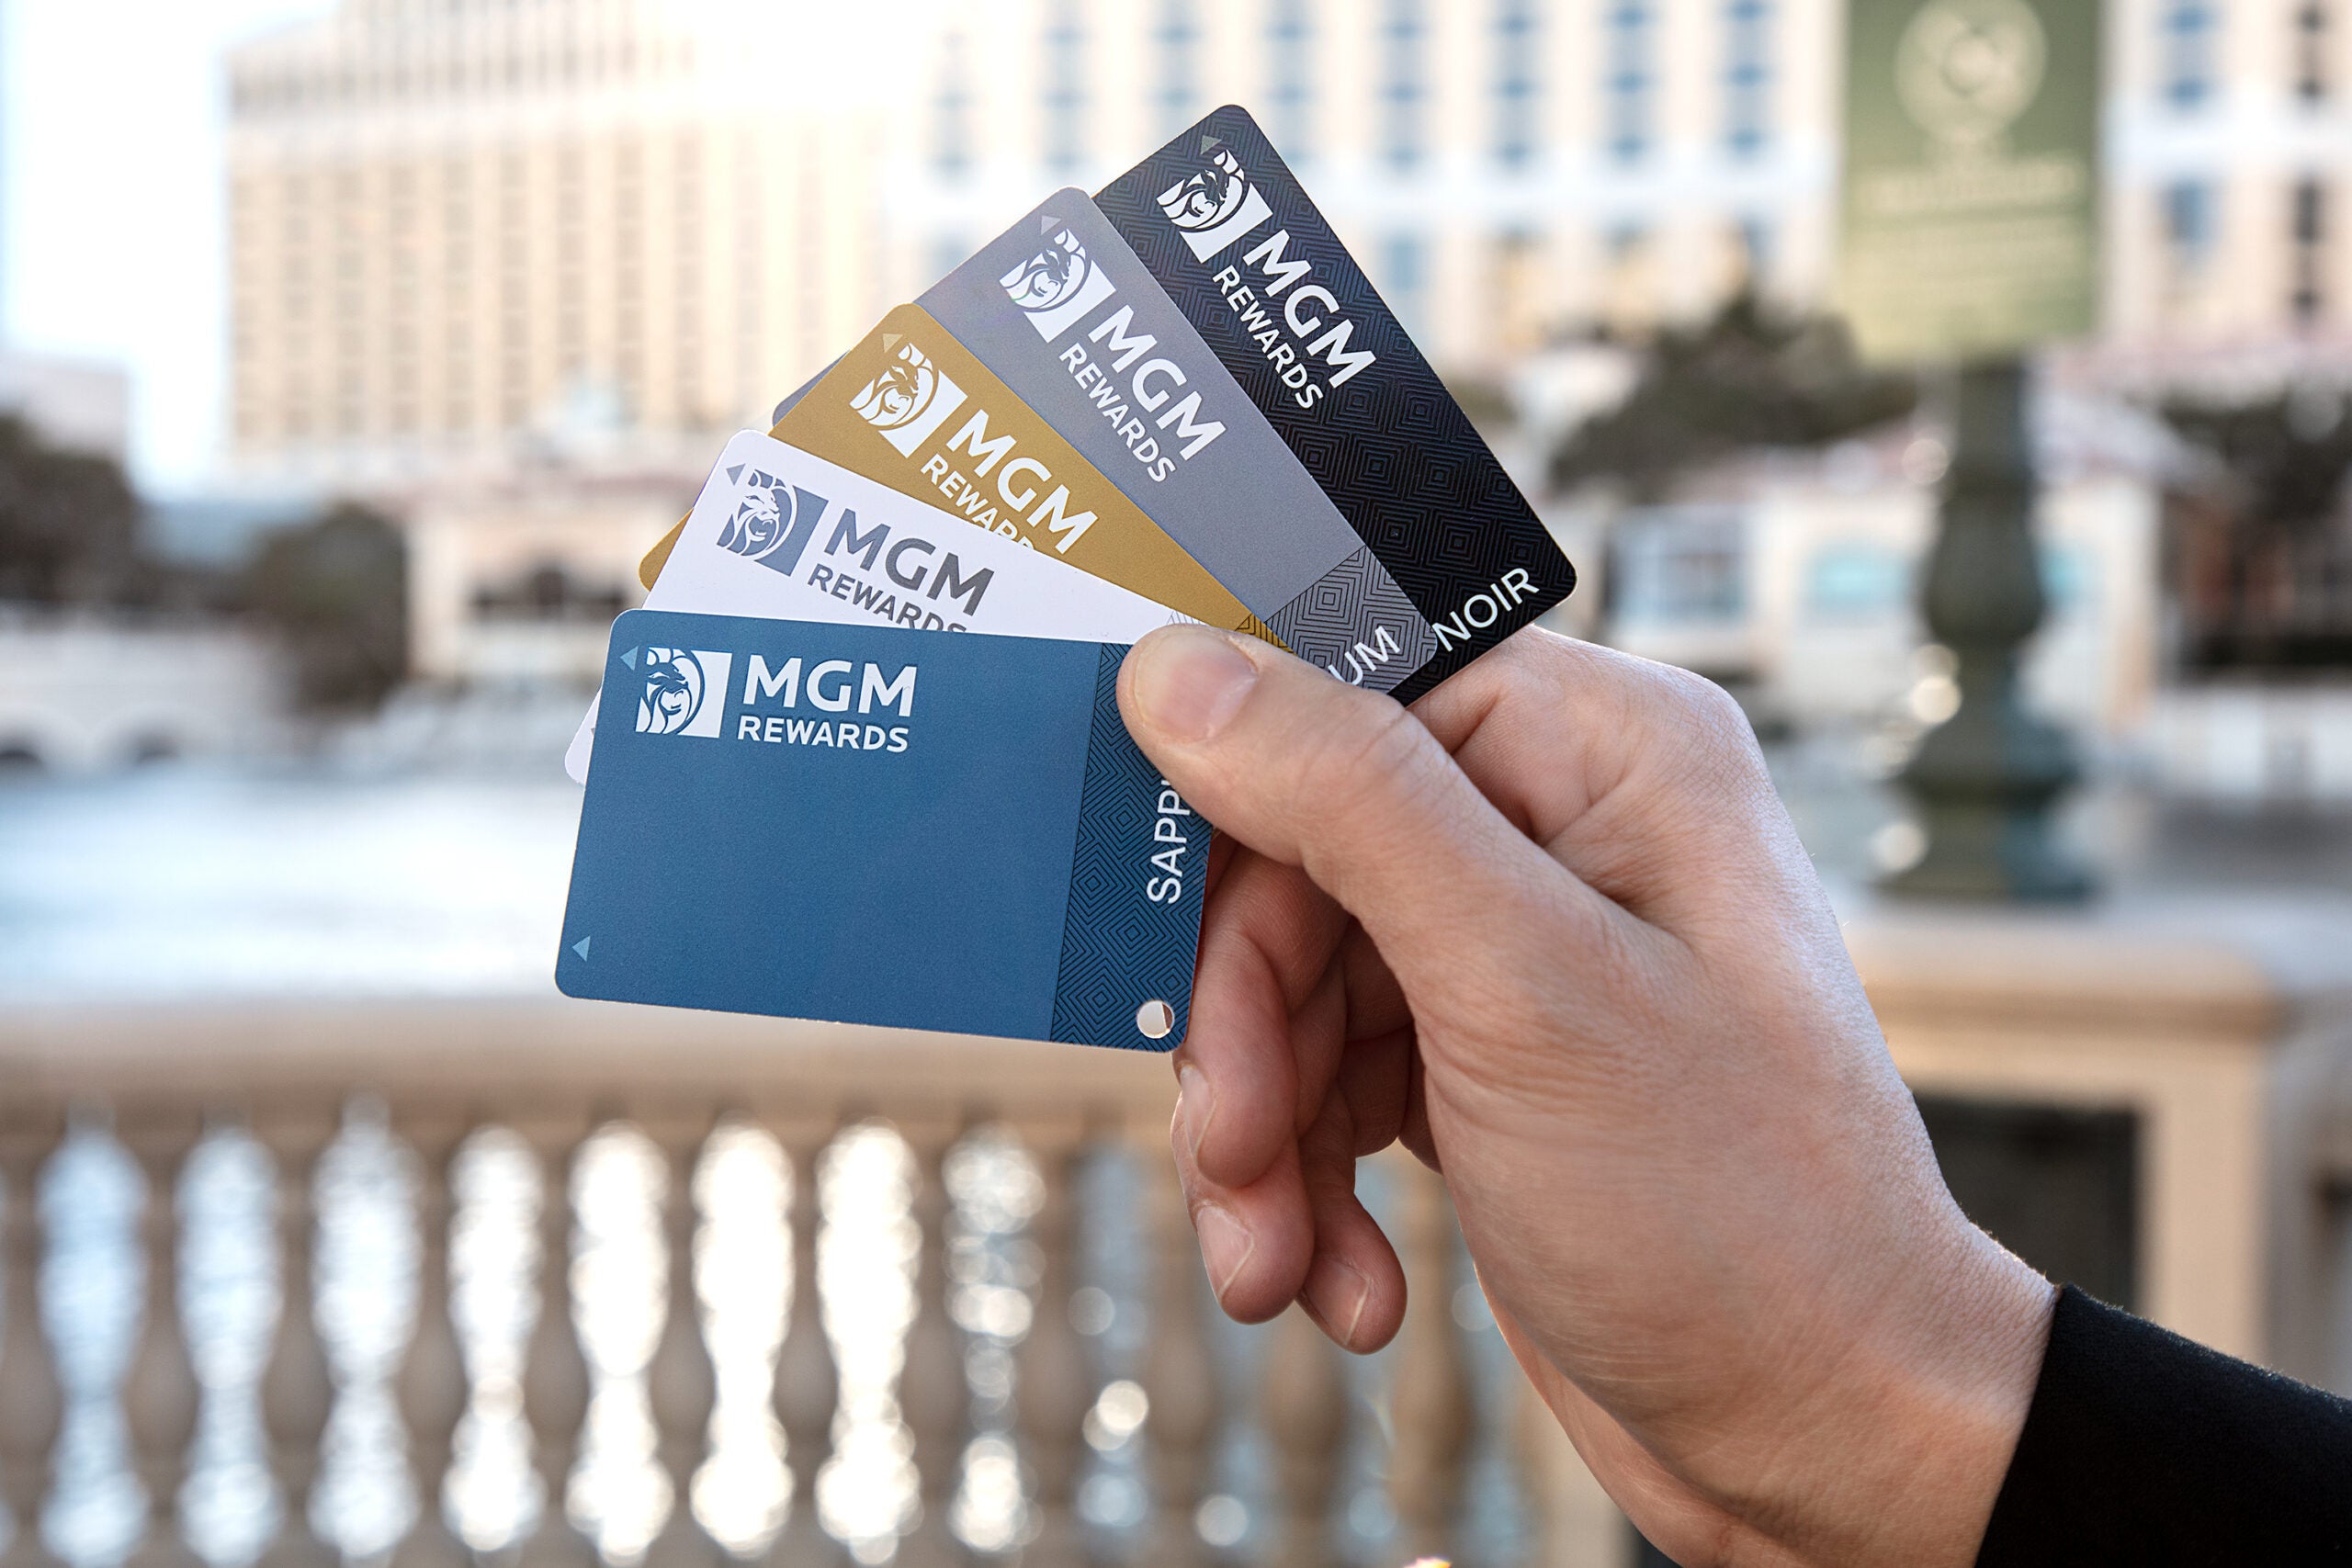 New MGM Rewards cards